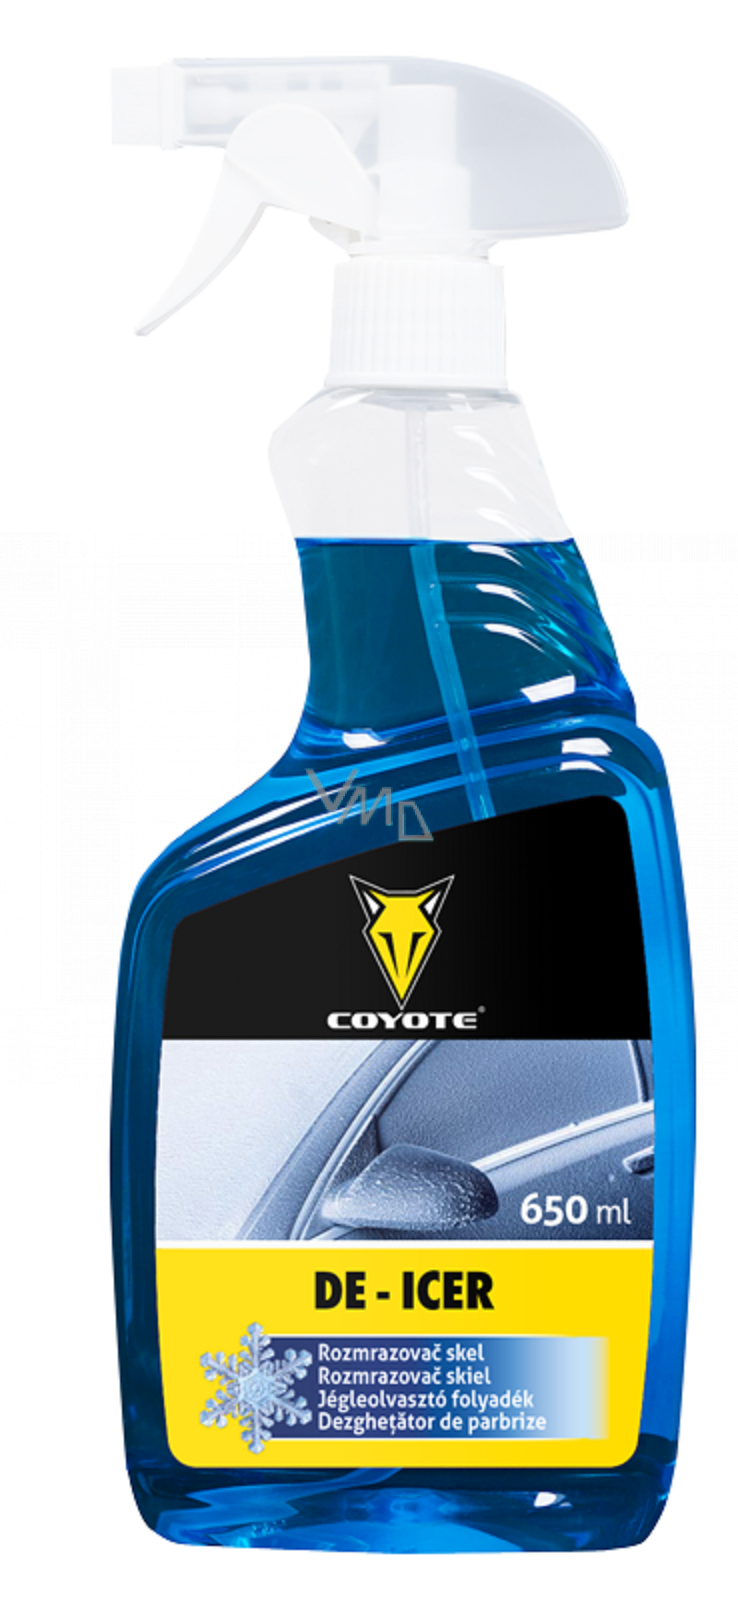 Coyote De-Icer glass defroster spray 650 ml - VMD parfumerie - drogerie